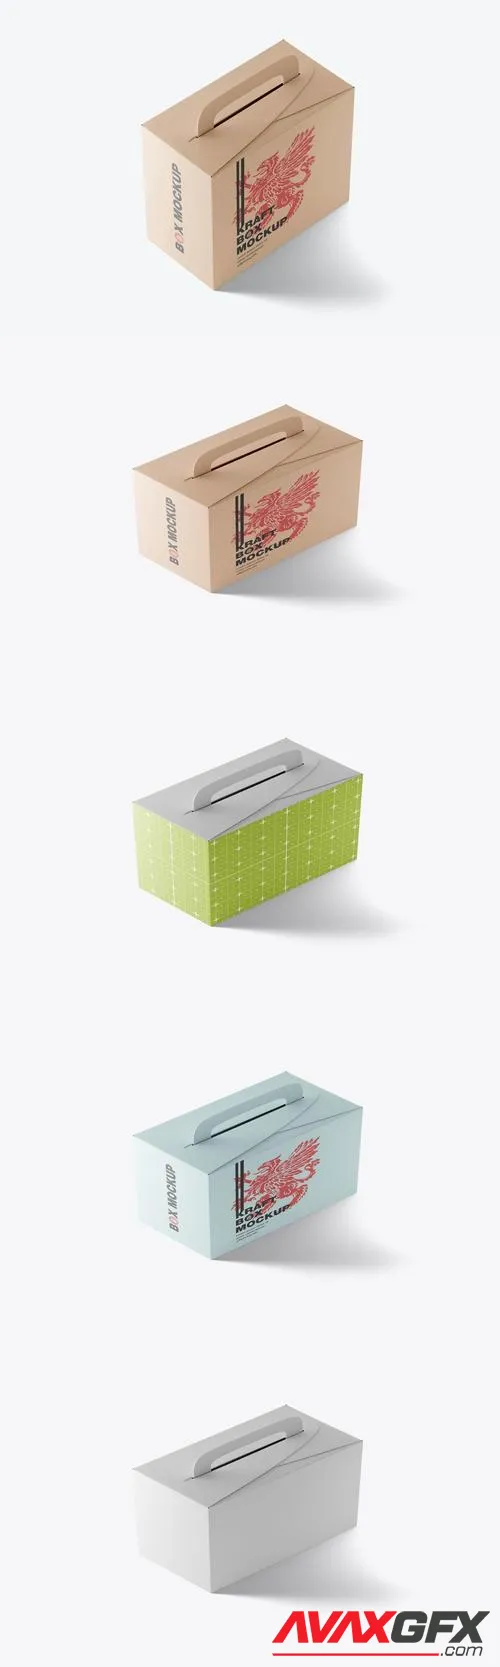 Kraft Paper Box with Handle Mockup